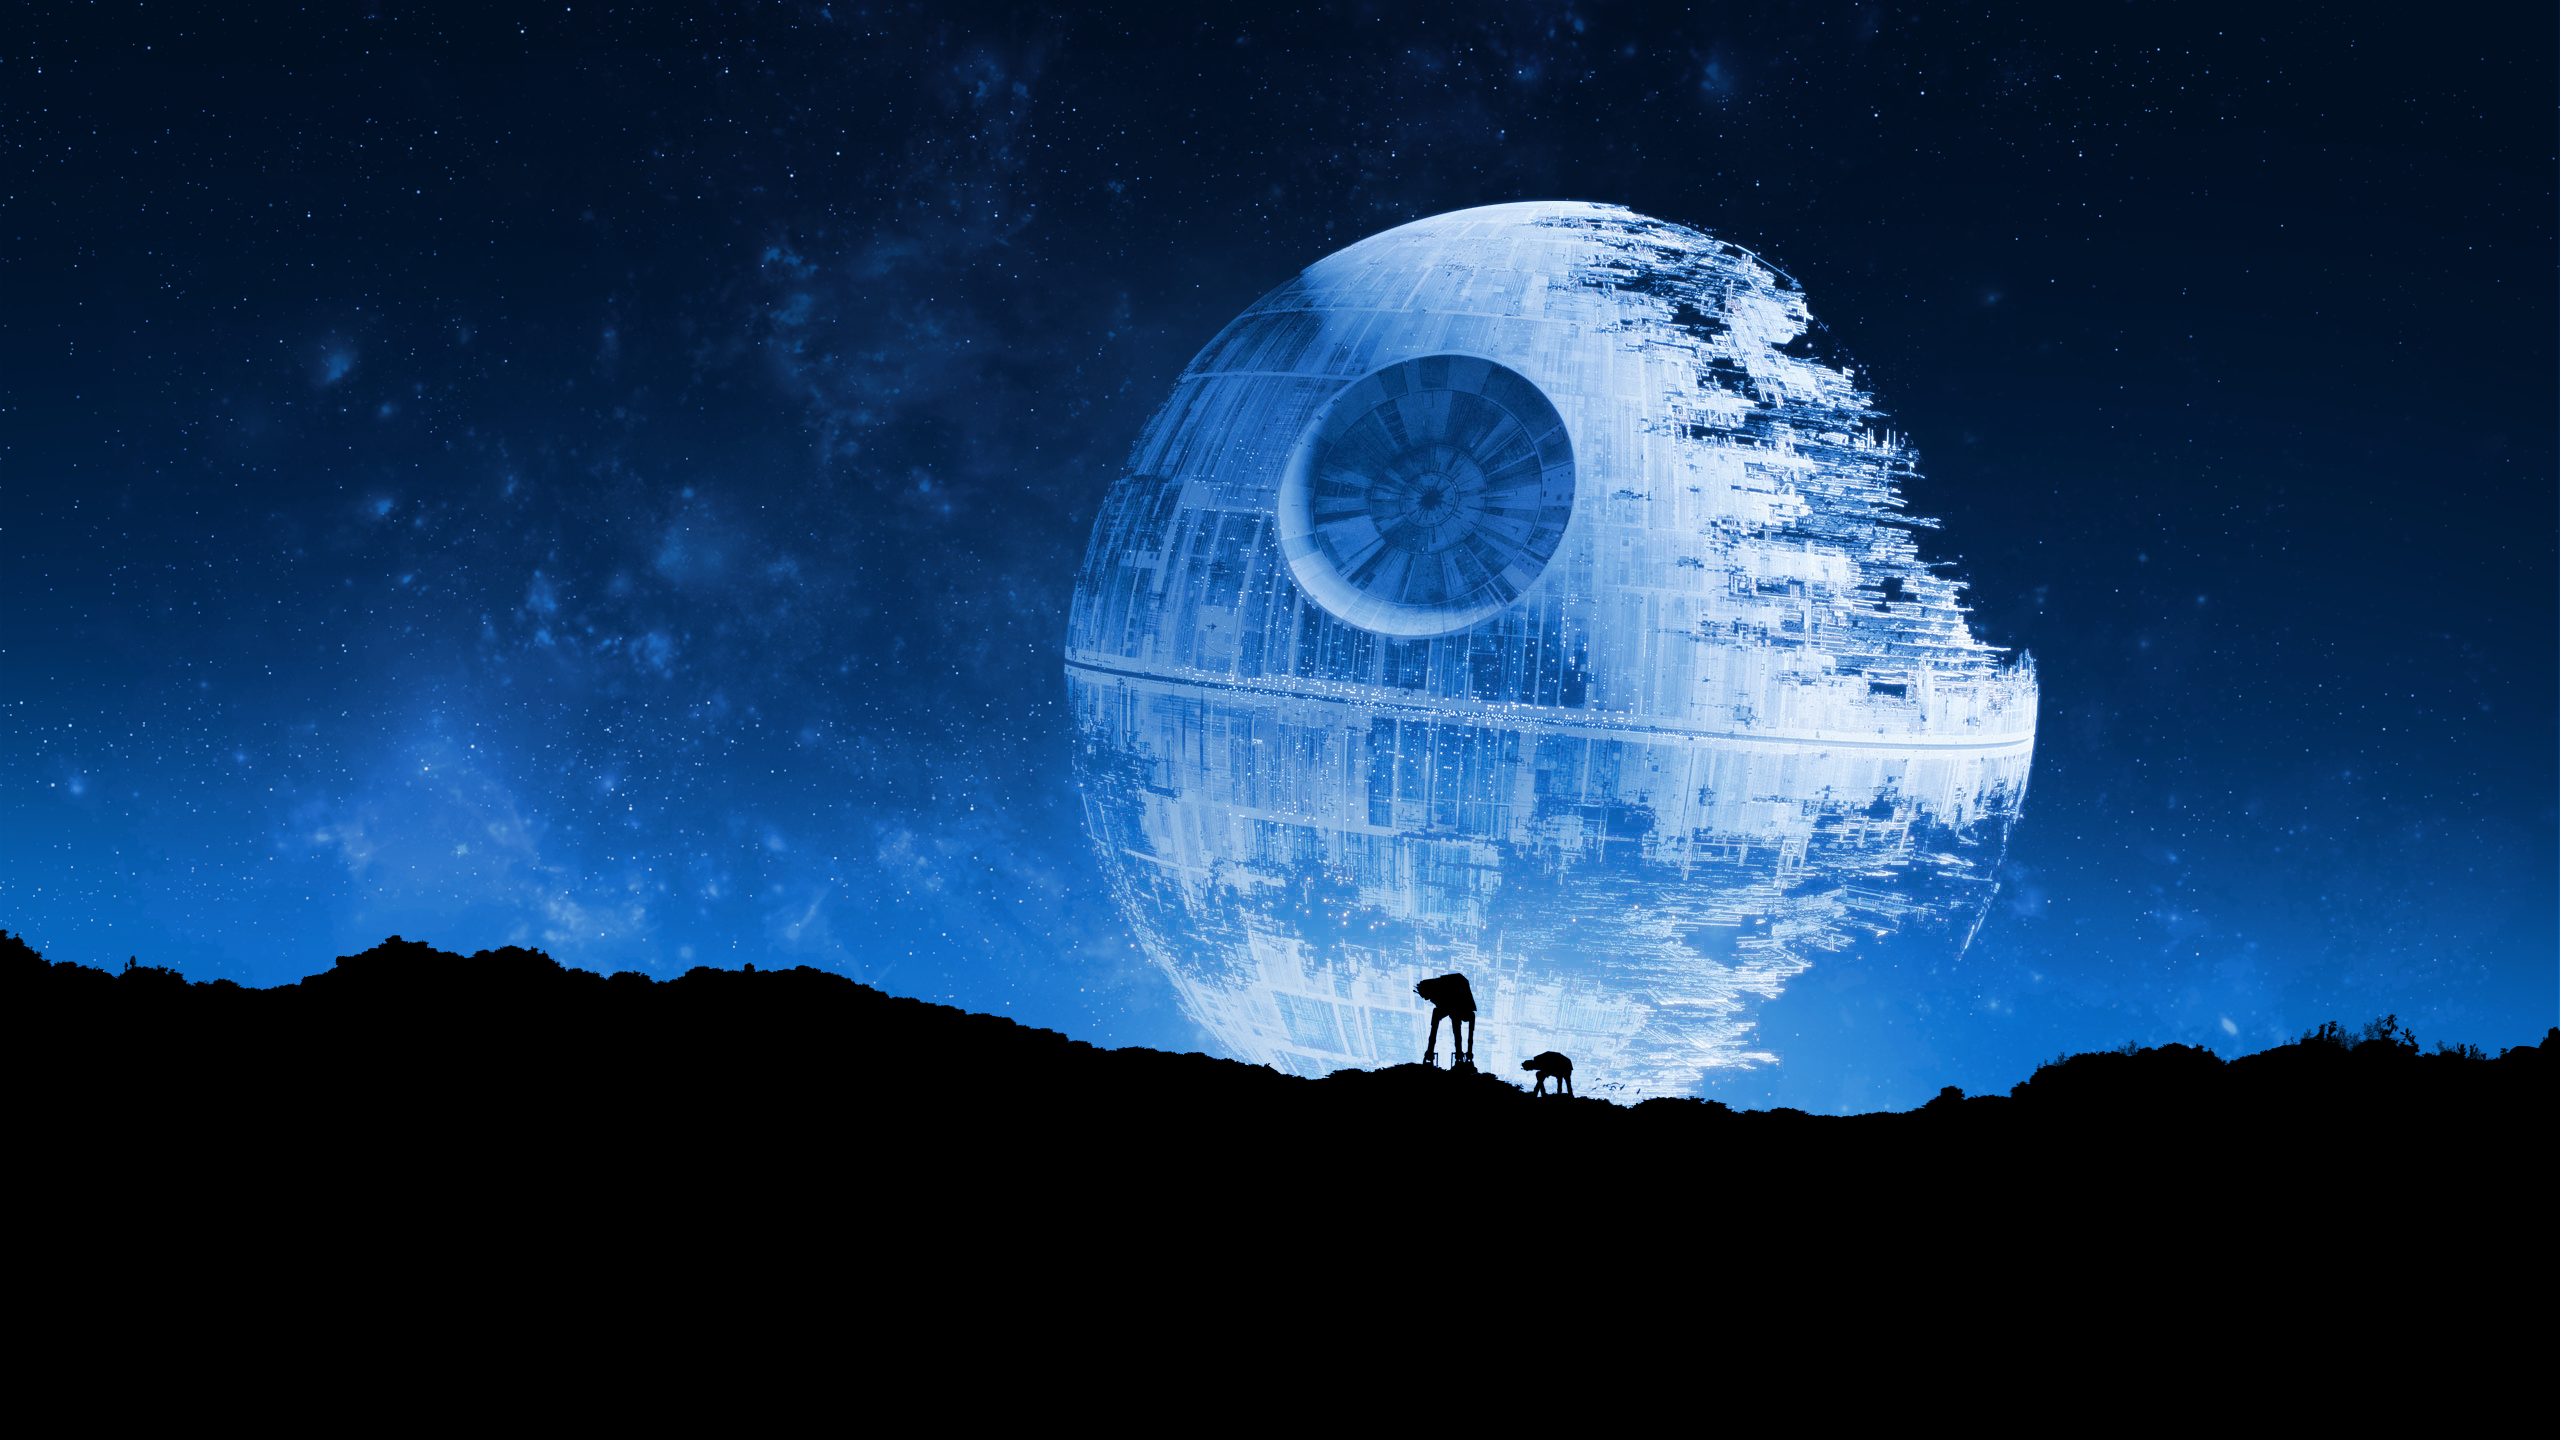 Wallpaper, Star Wars, Death Star, AT AT, space, night sky 2560x1440